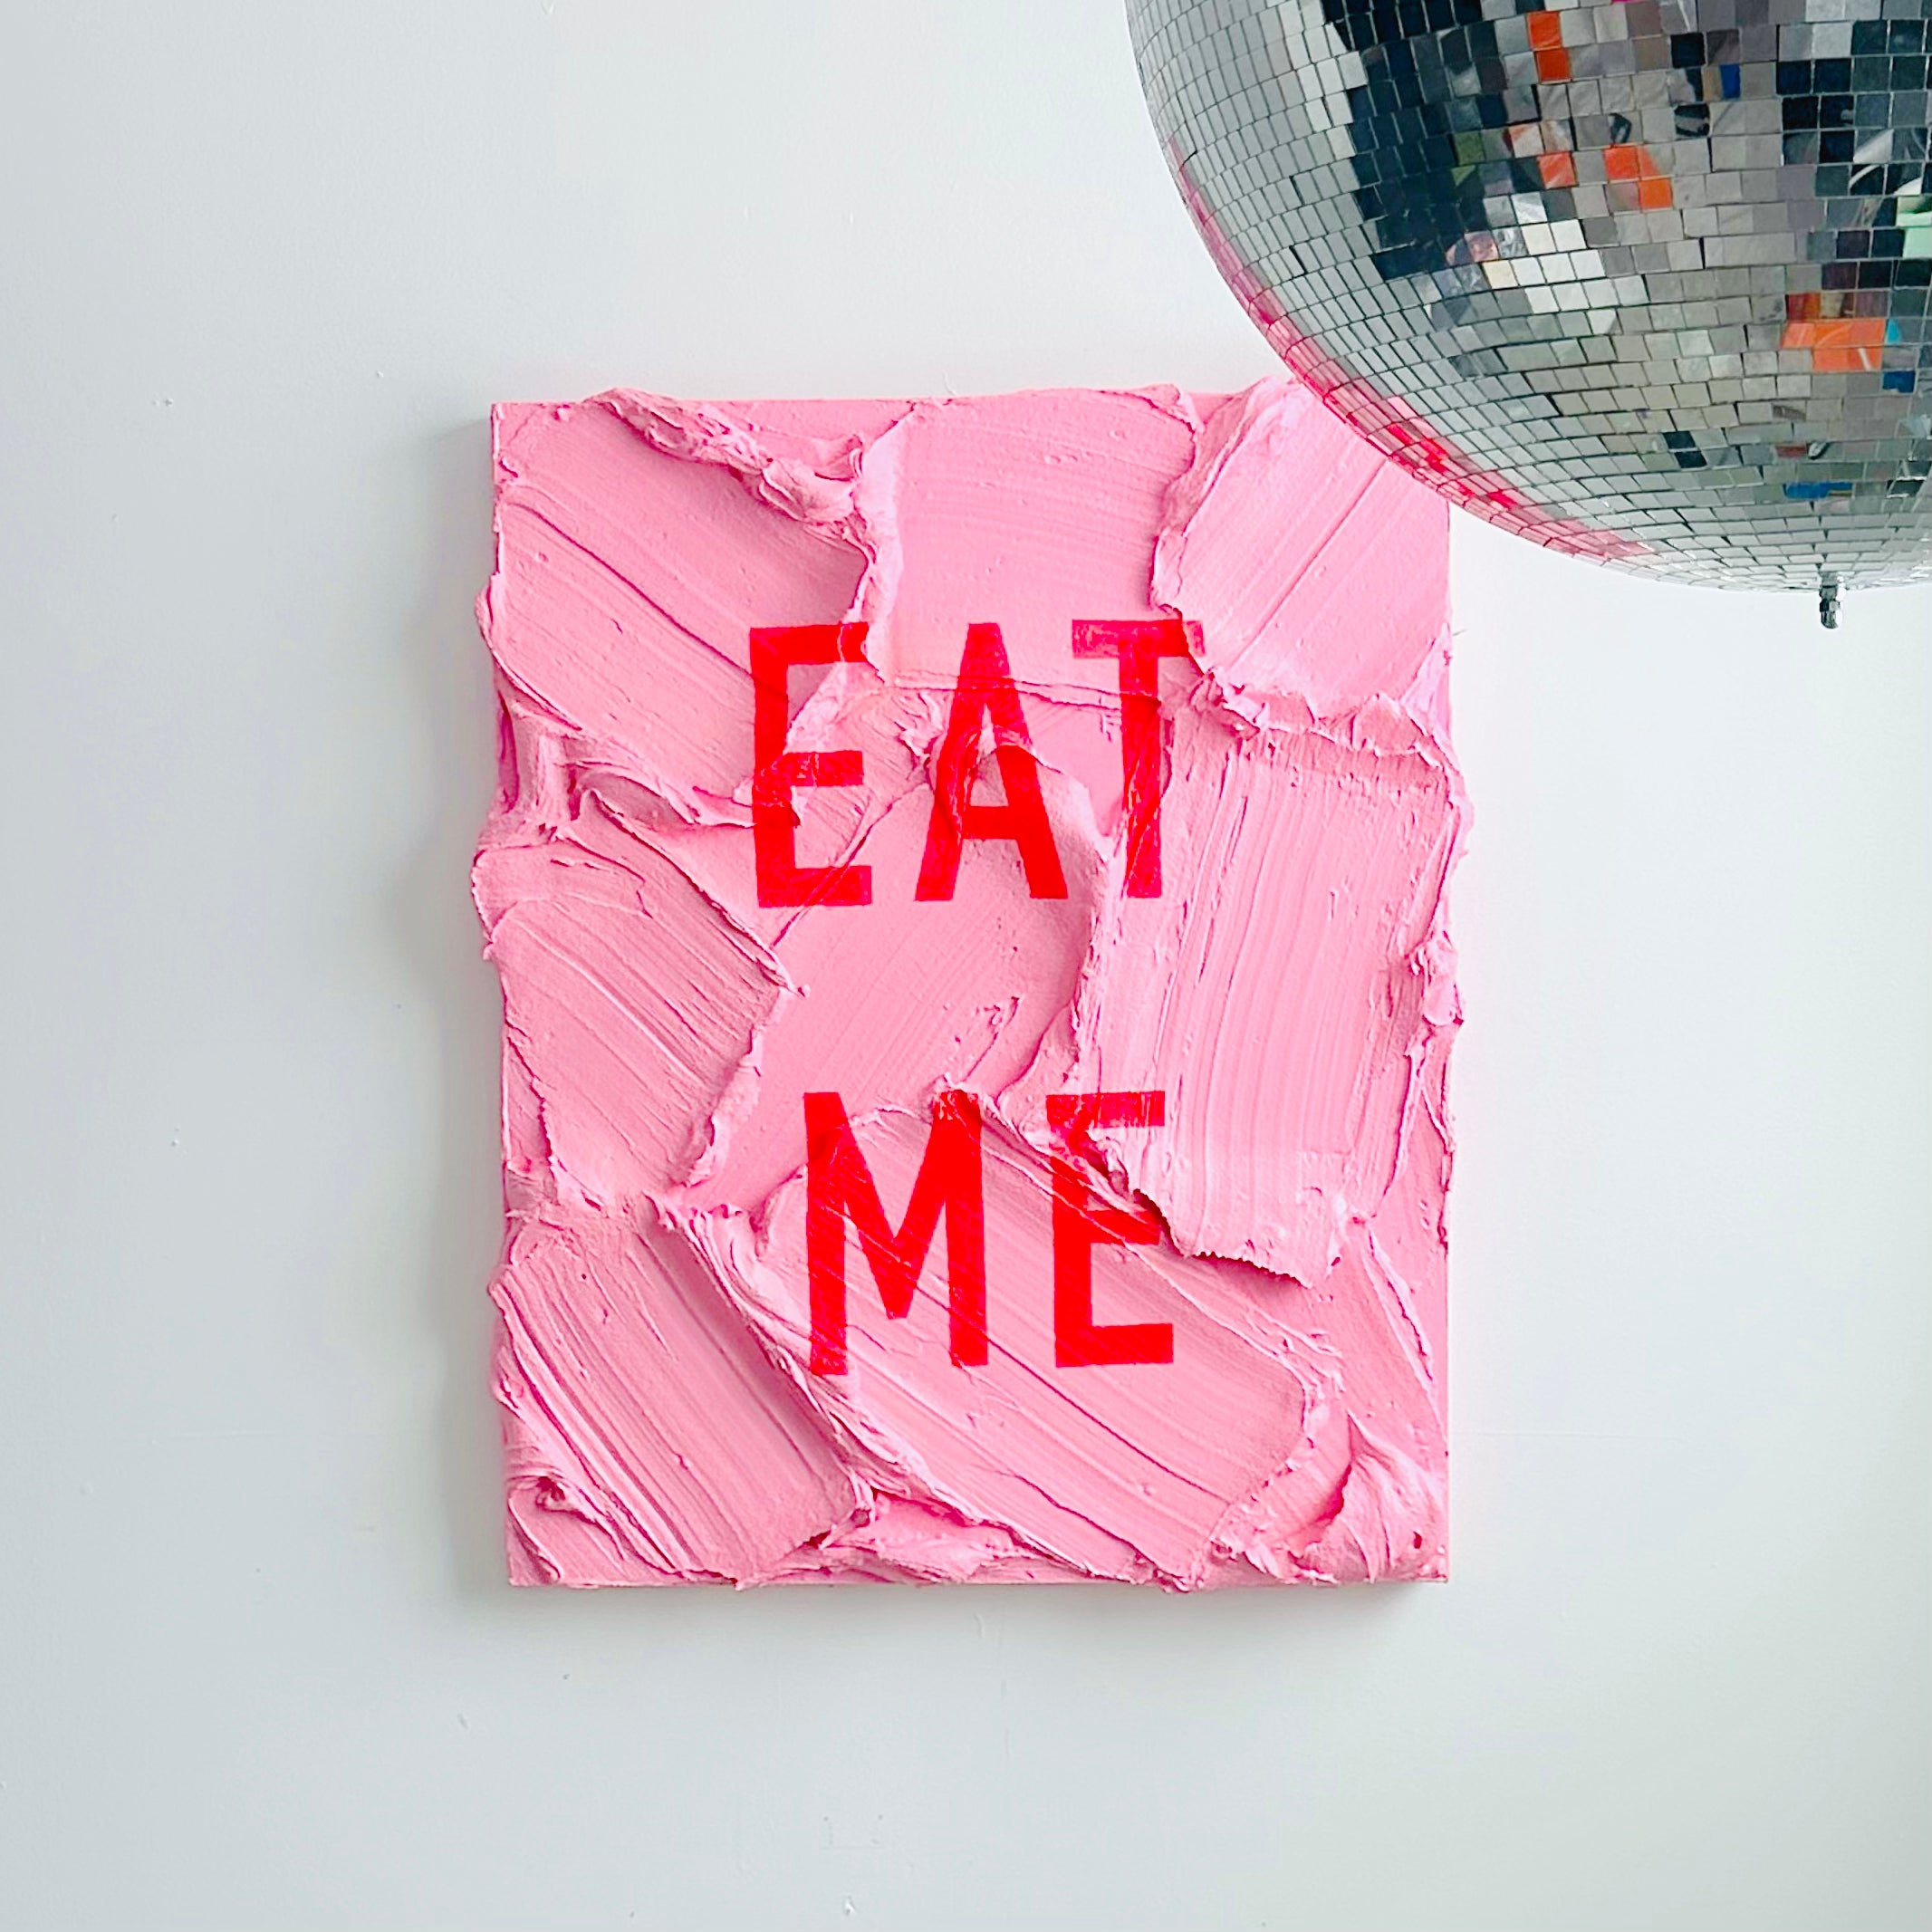 Eat Me - Pigmented Concrete